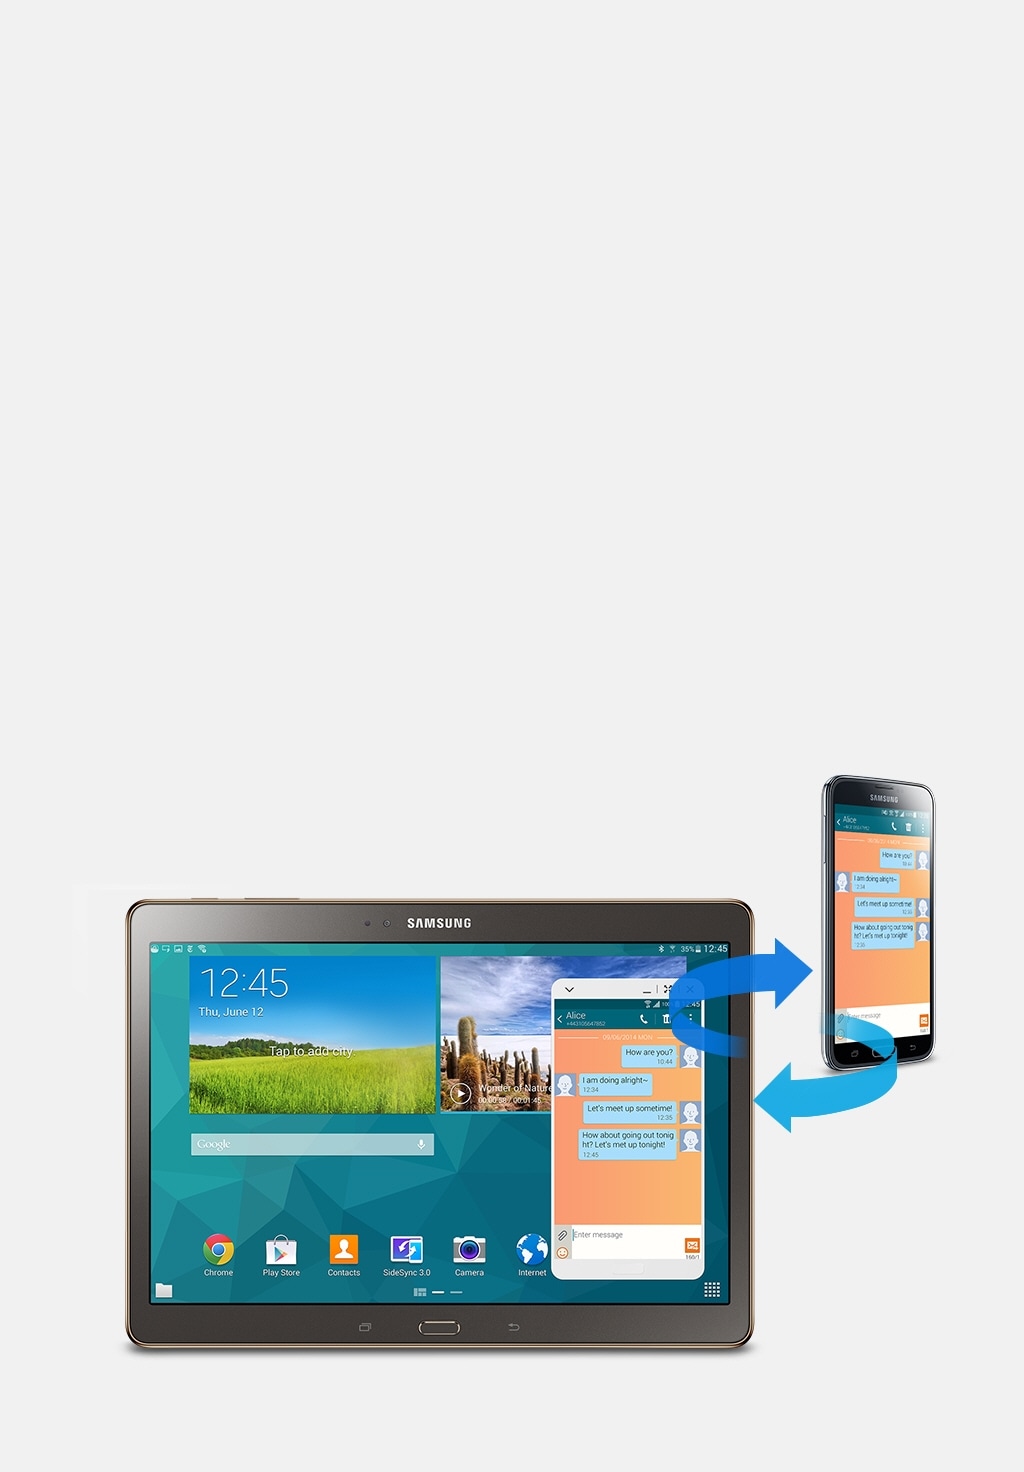 Tablette Samsung Galaxy TAB S 10.5 SM-T805 - 4G tout opérateur